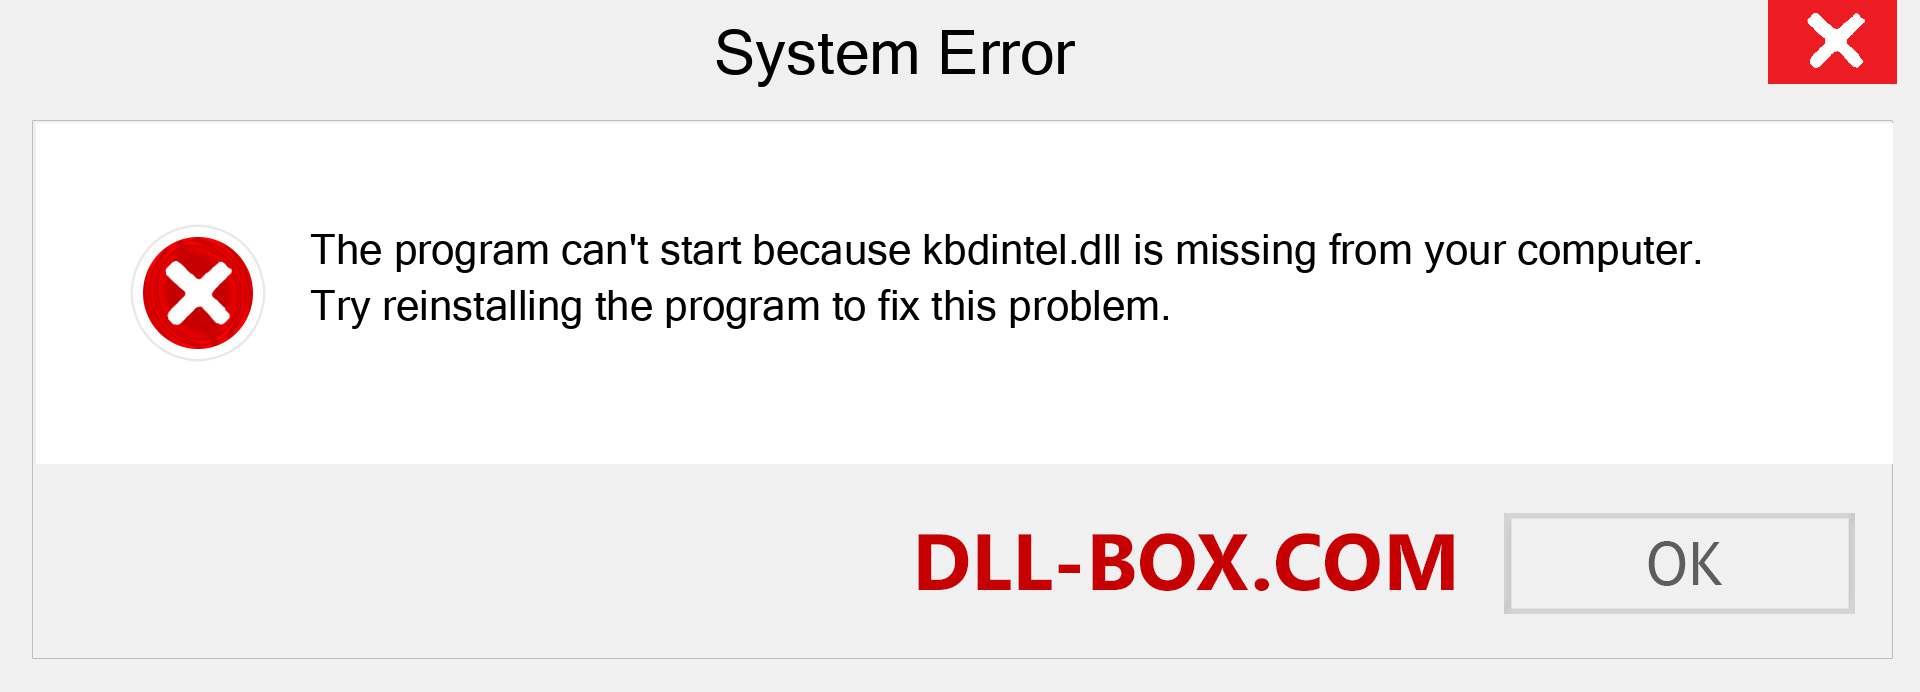  kbdintel.dll file is missing?. Download for Windows 7, 8, 10 - Fix  kbdintel dll Missing Error on Windows, photos, images